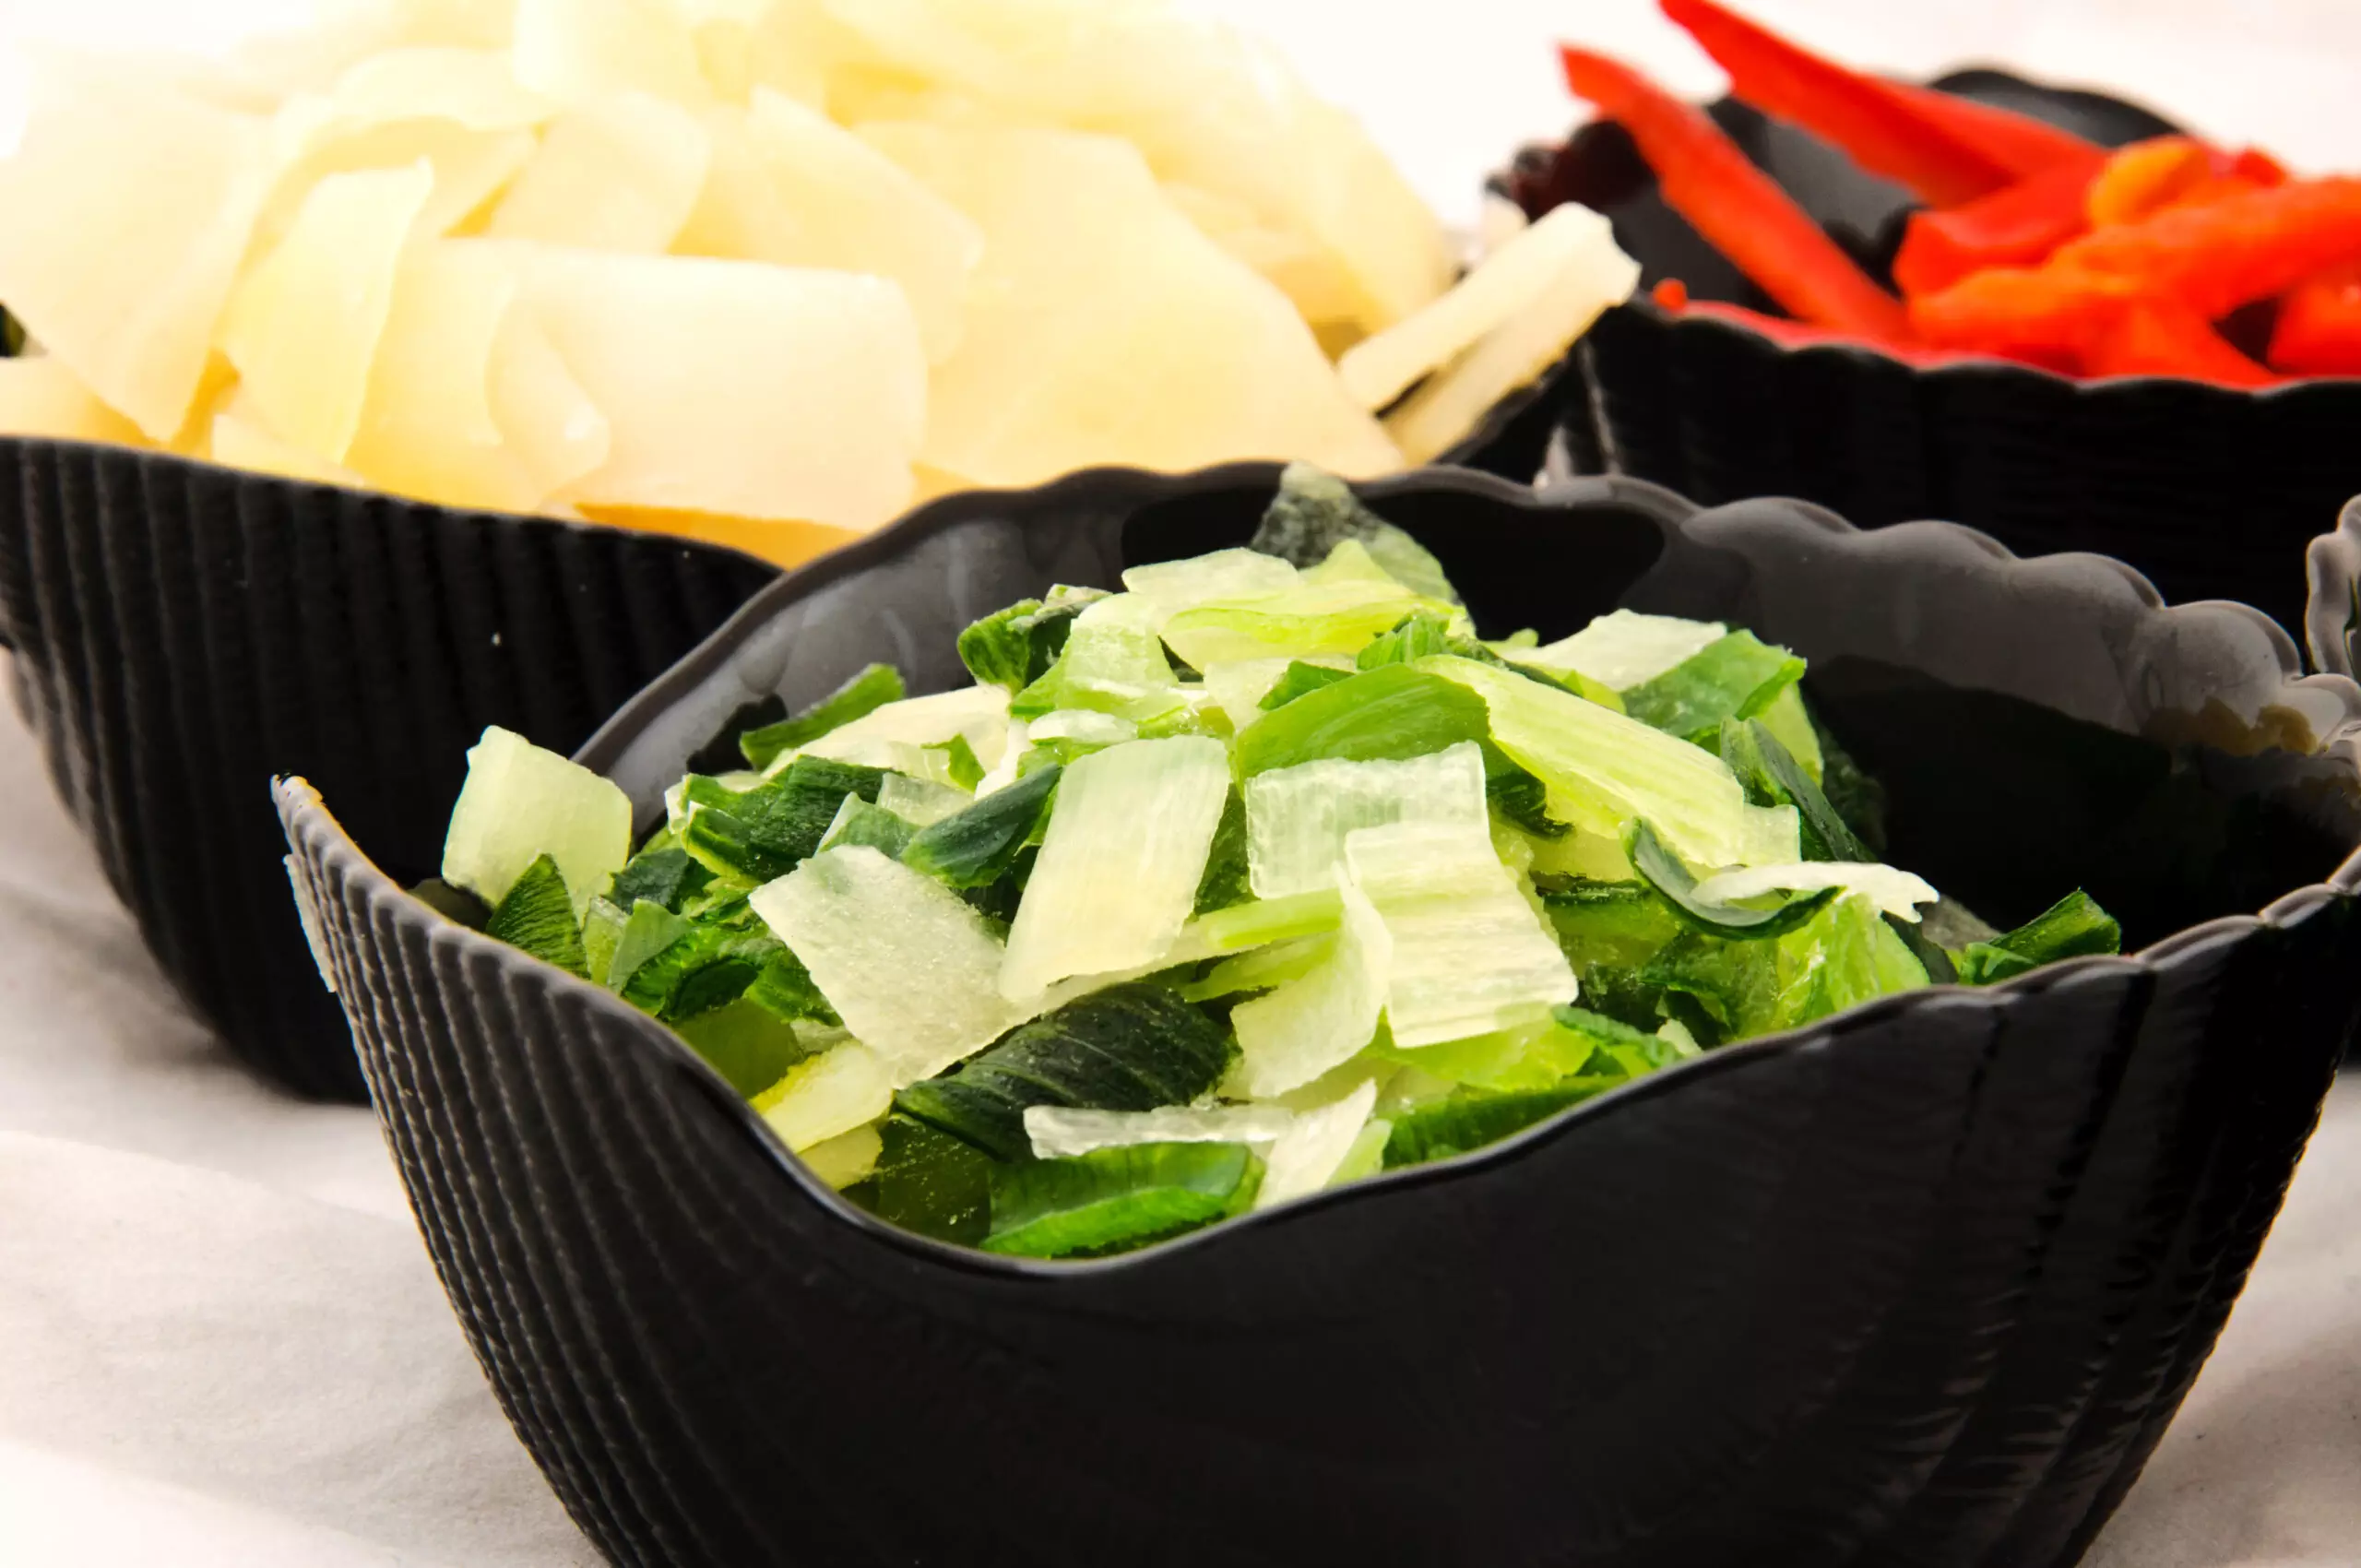 Assorted fresh vegetable slices in black bowls.